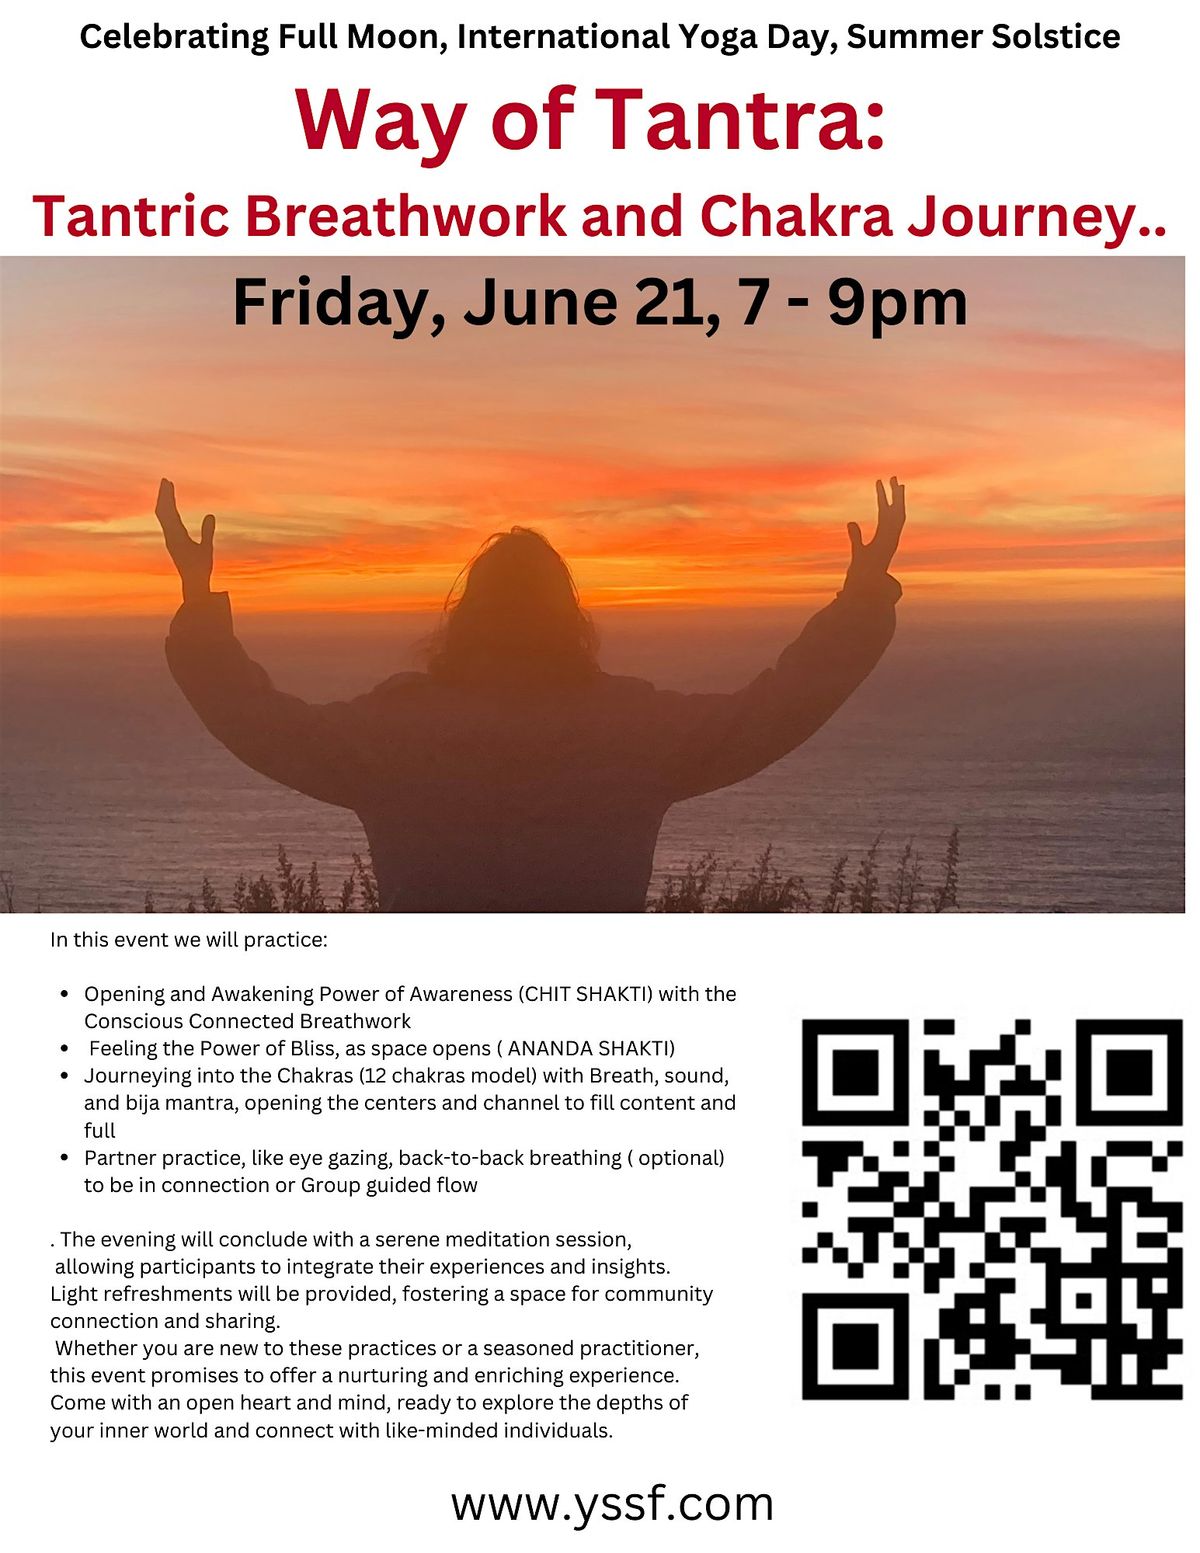 Way of Tantra: Breathwork Workshop: Journey to Blissful Awareness!